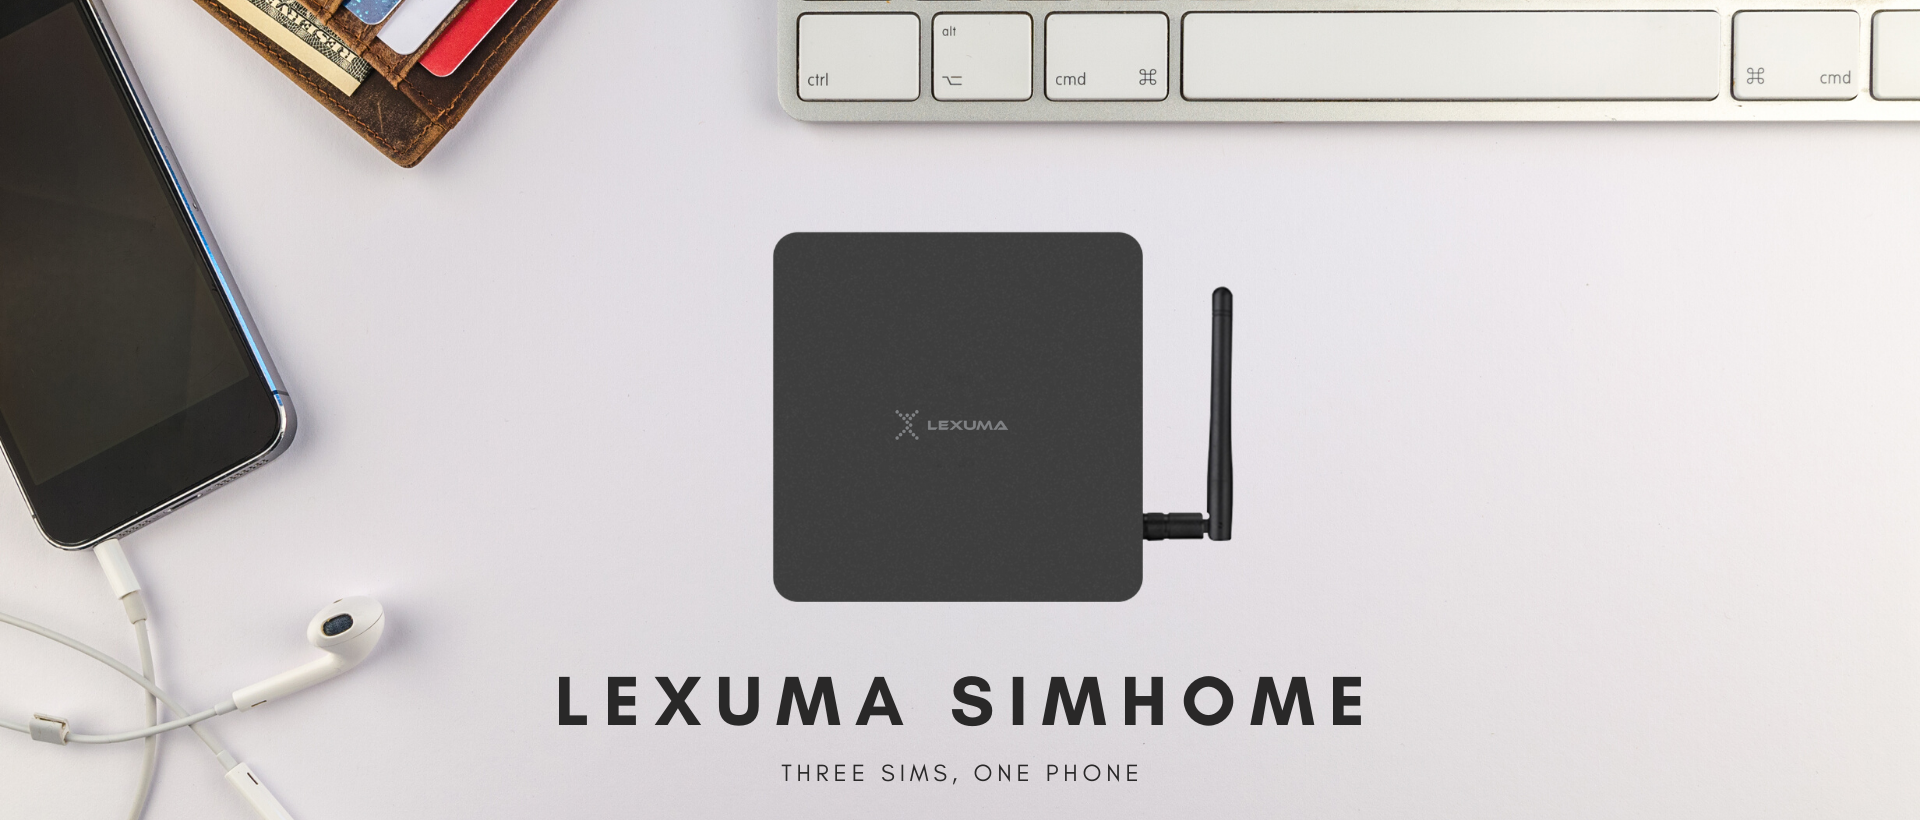 lexuma-simhome-dual-sim-standby-roaming-gateway-adapter-router-banner-